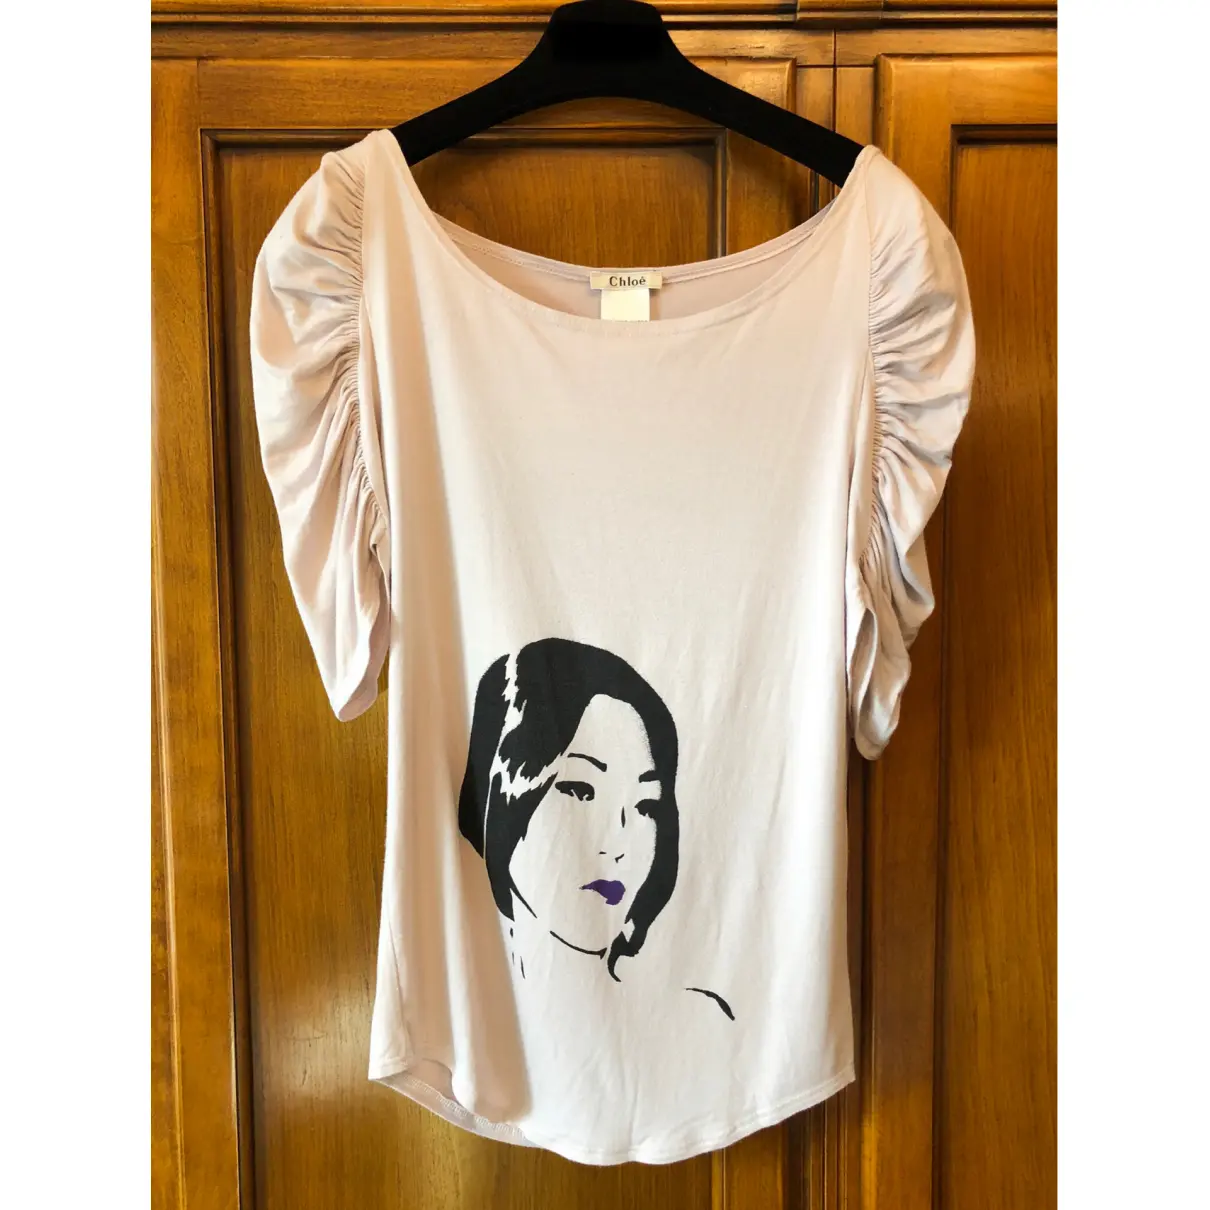 Buy Chloé T-shirt online - Vintage